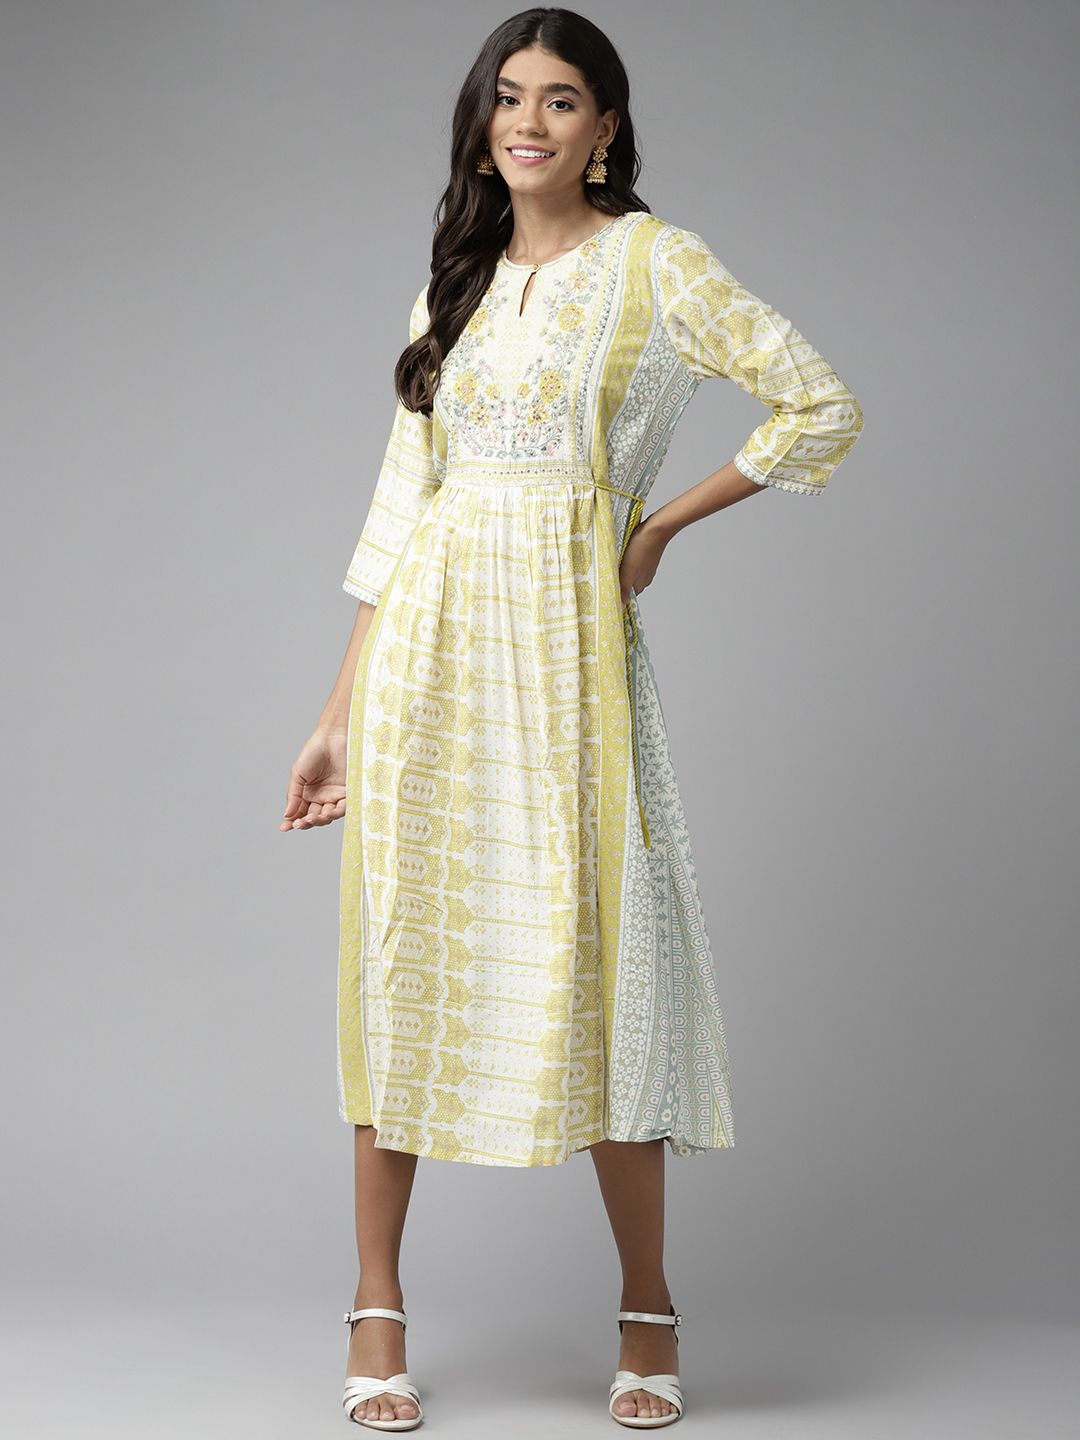 W Women White & Olive Green Ethnic Motifs Keyhole Neck A-Line Midi Dress Price in India